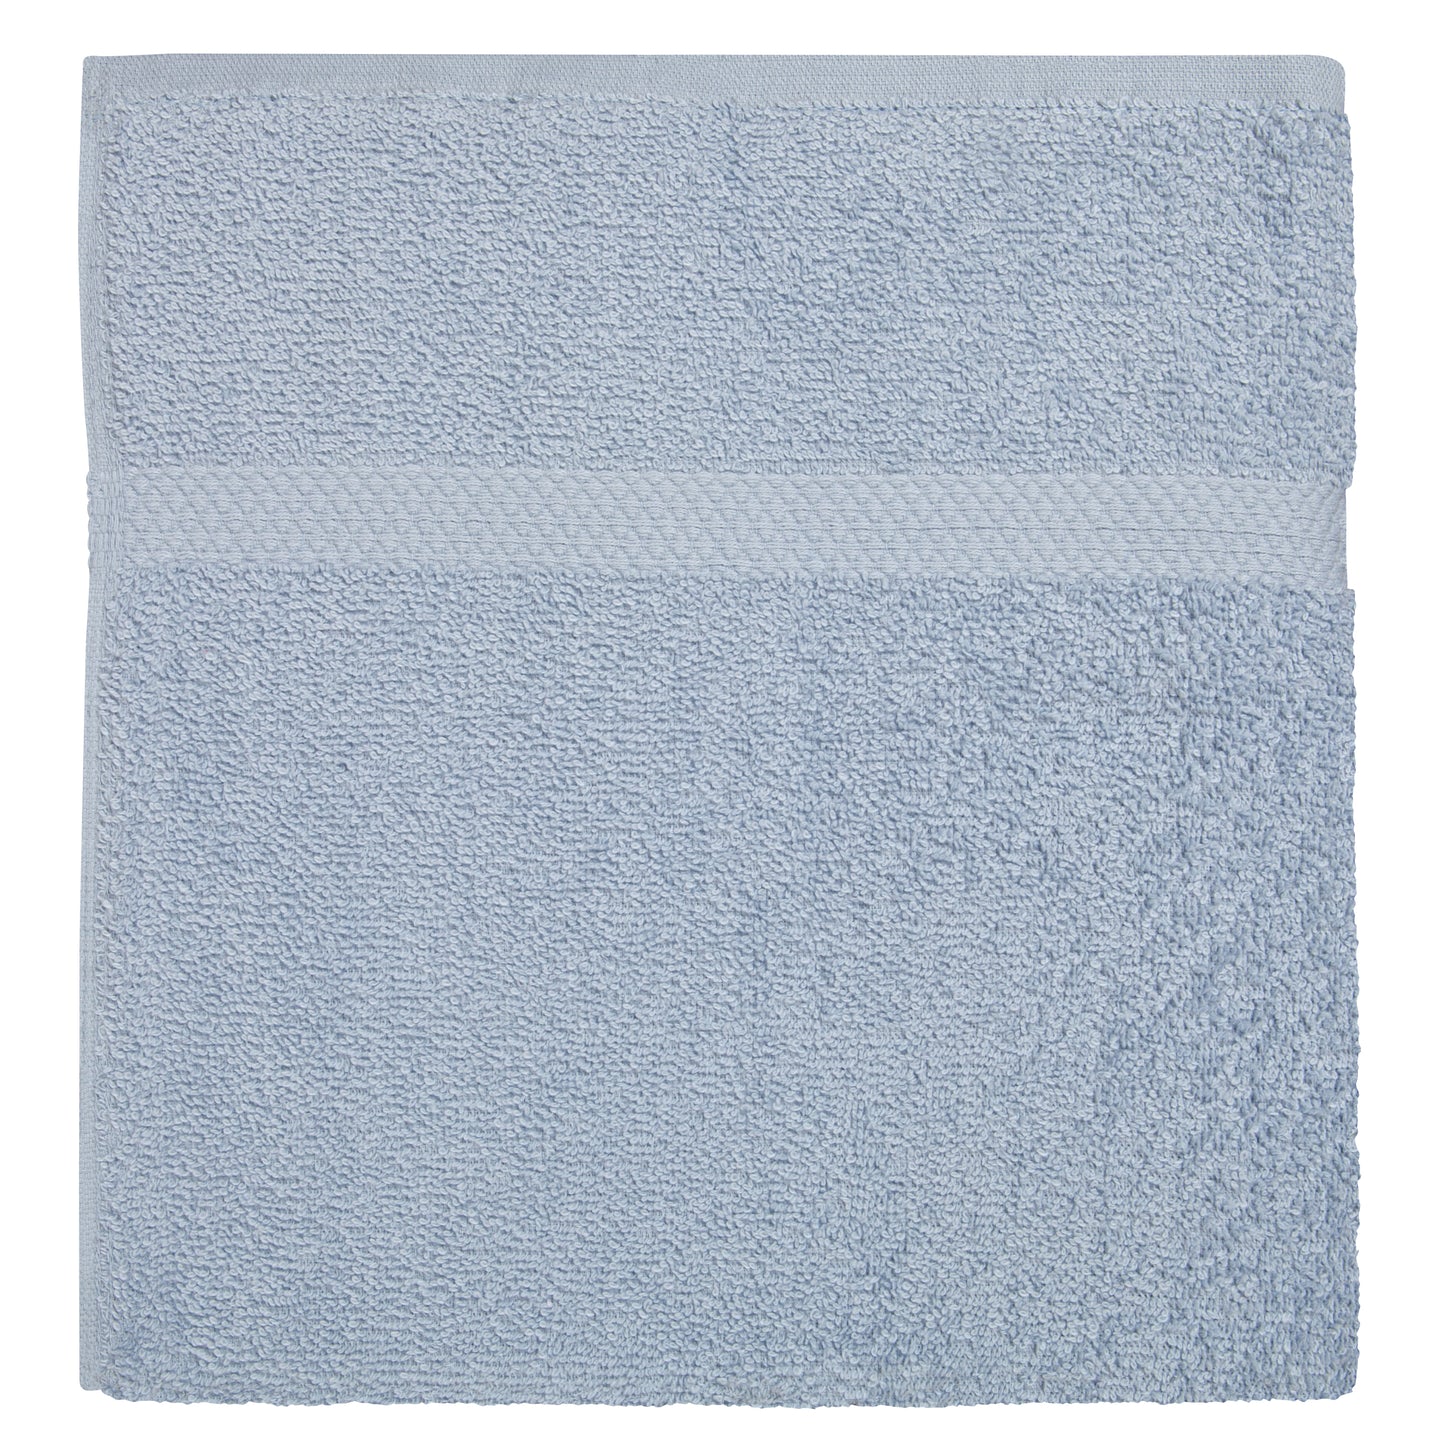 Premium Bath Towel, 24x48 inch, Vat Dyed, Dobby Border, Blue